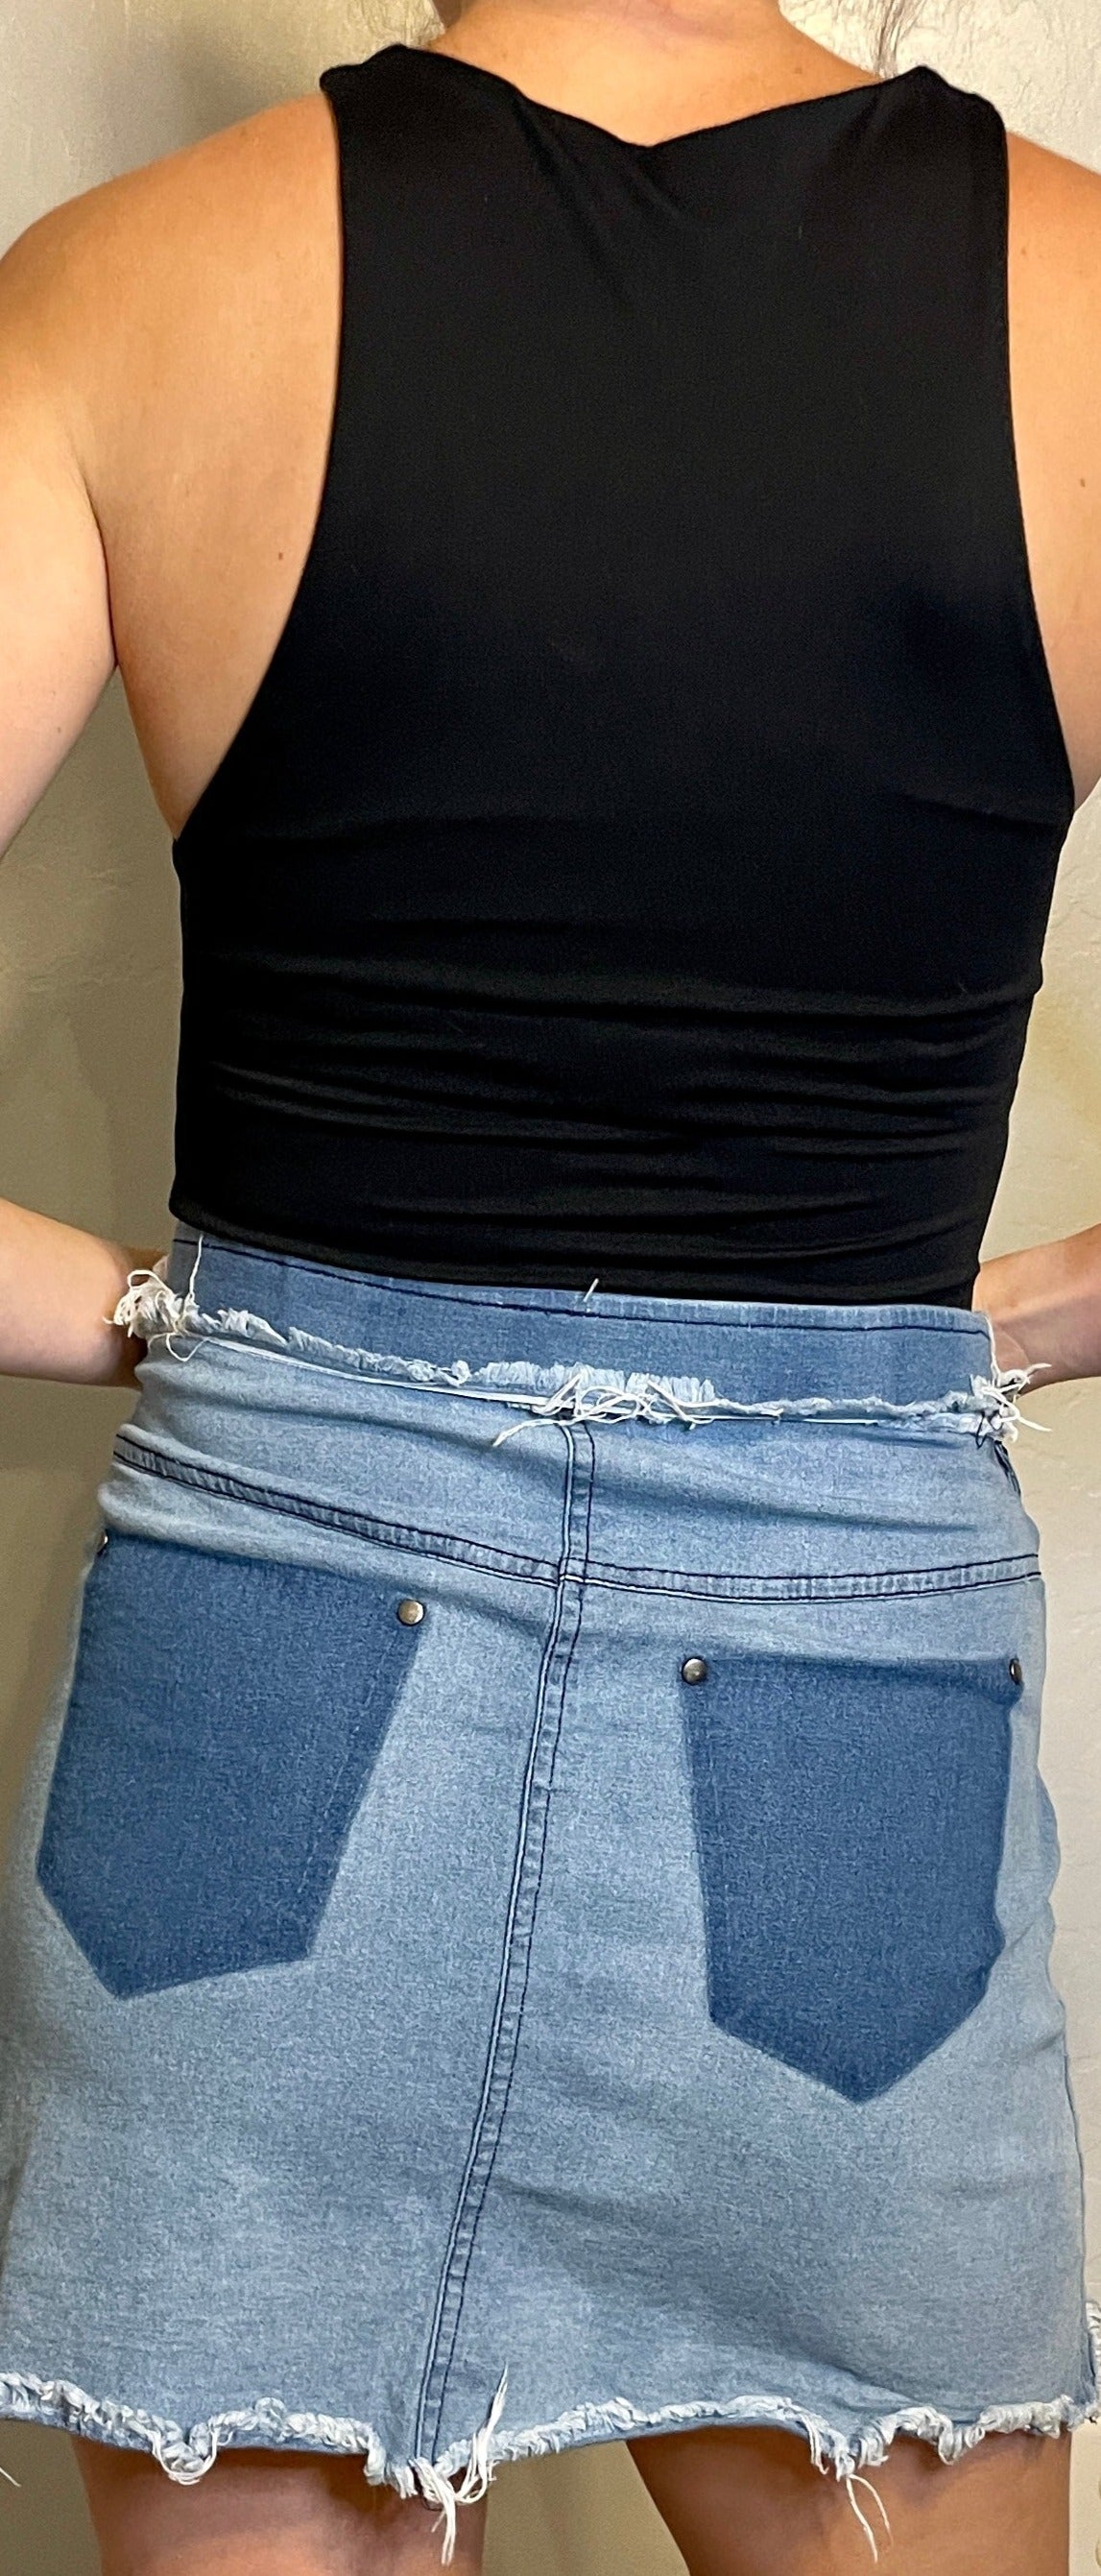 Handmade Denim Skirt with Frayed Edges